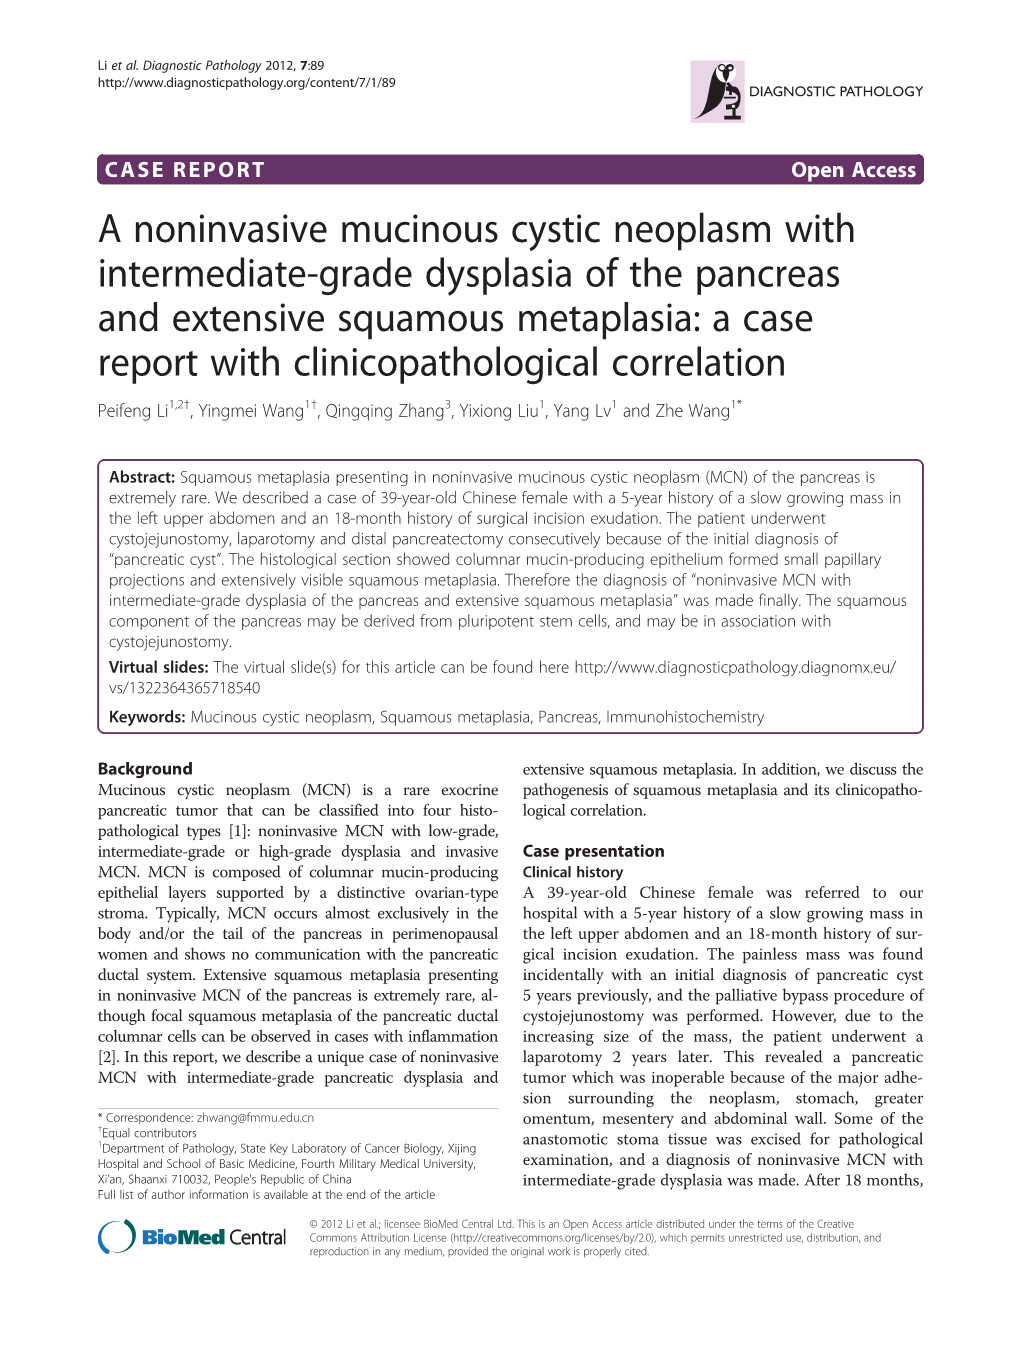 A Noninvasive Mucinous Cystic Neoplasm